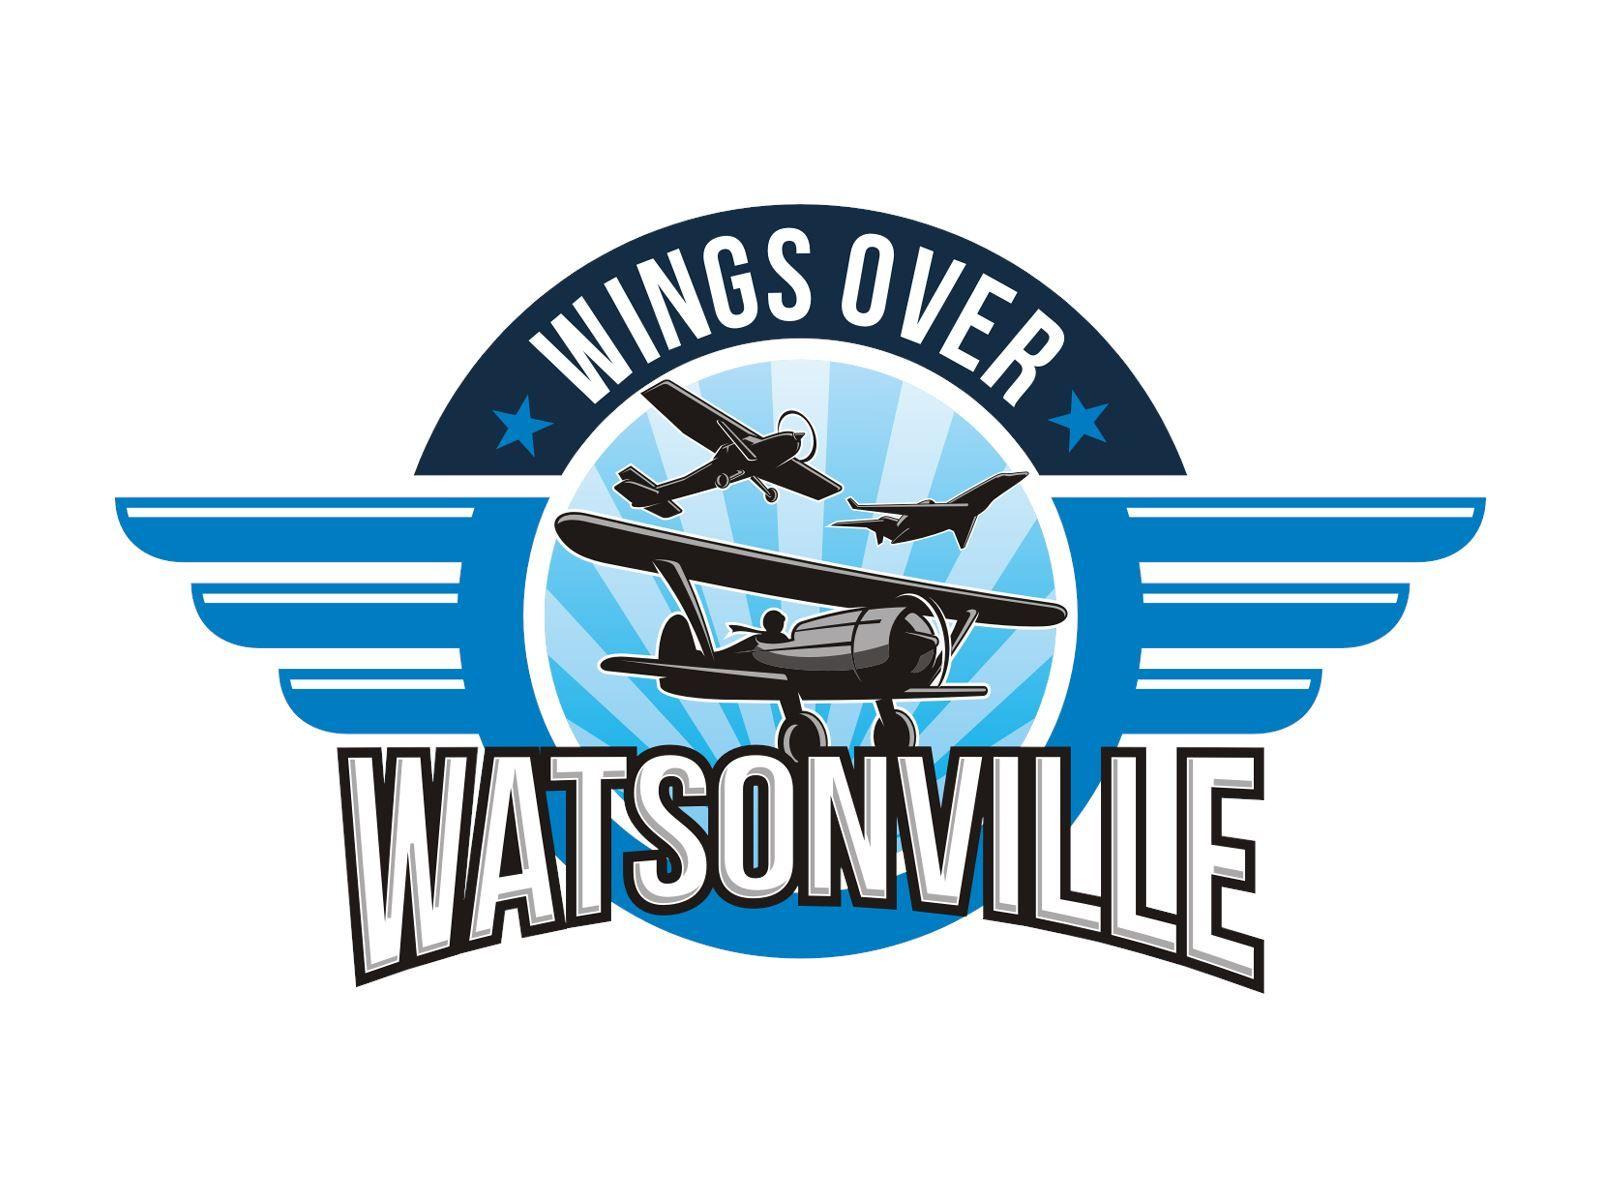 Watsonville Logo - Organizations